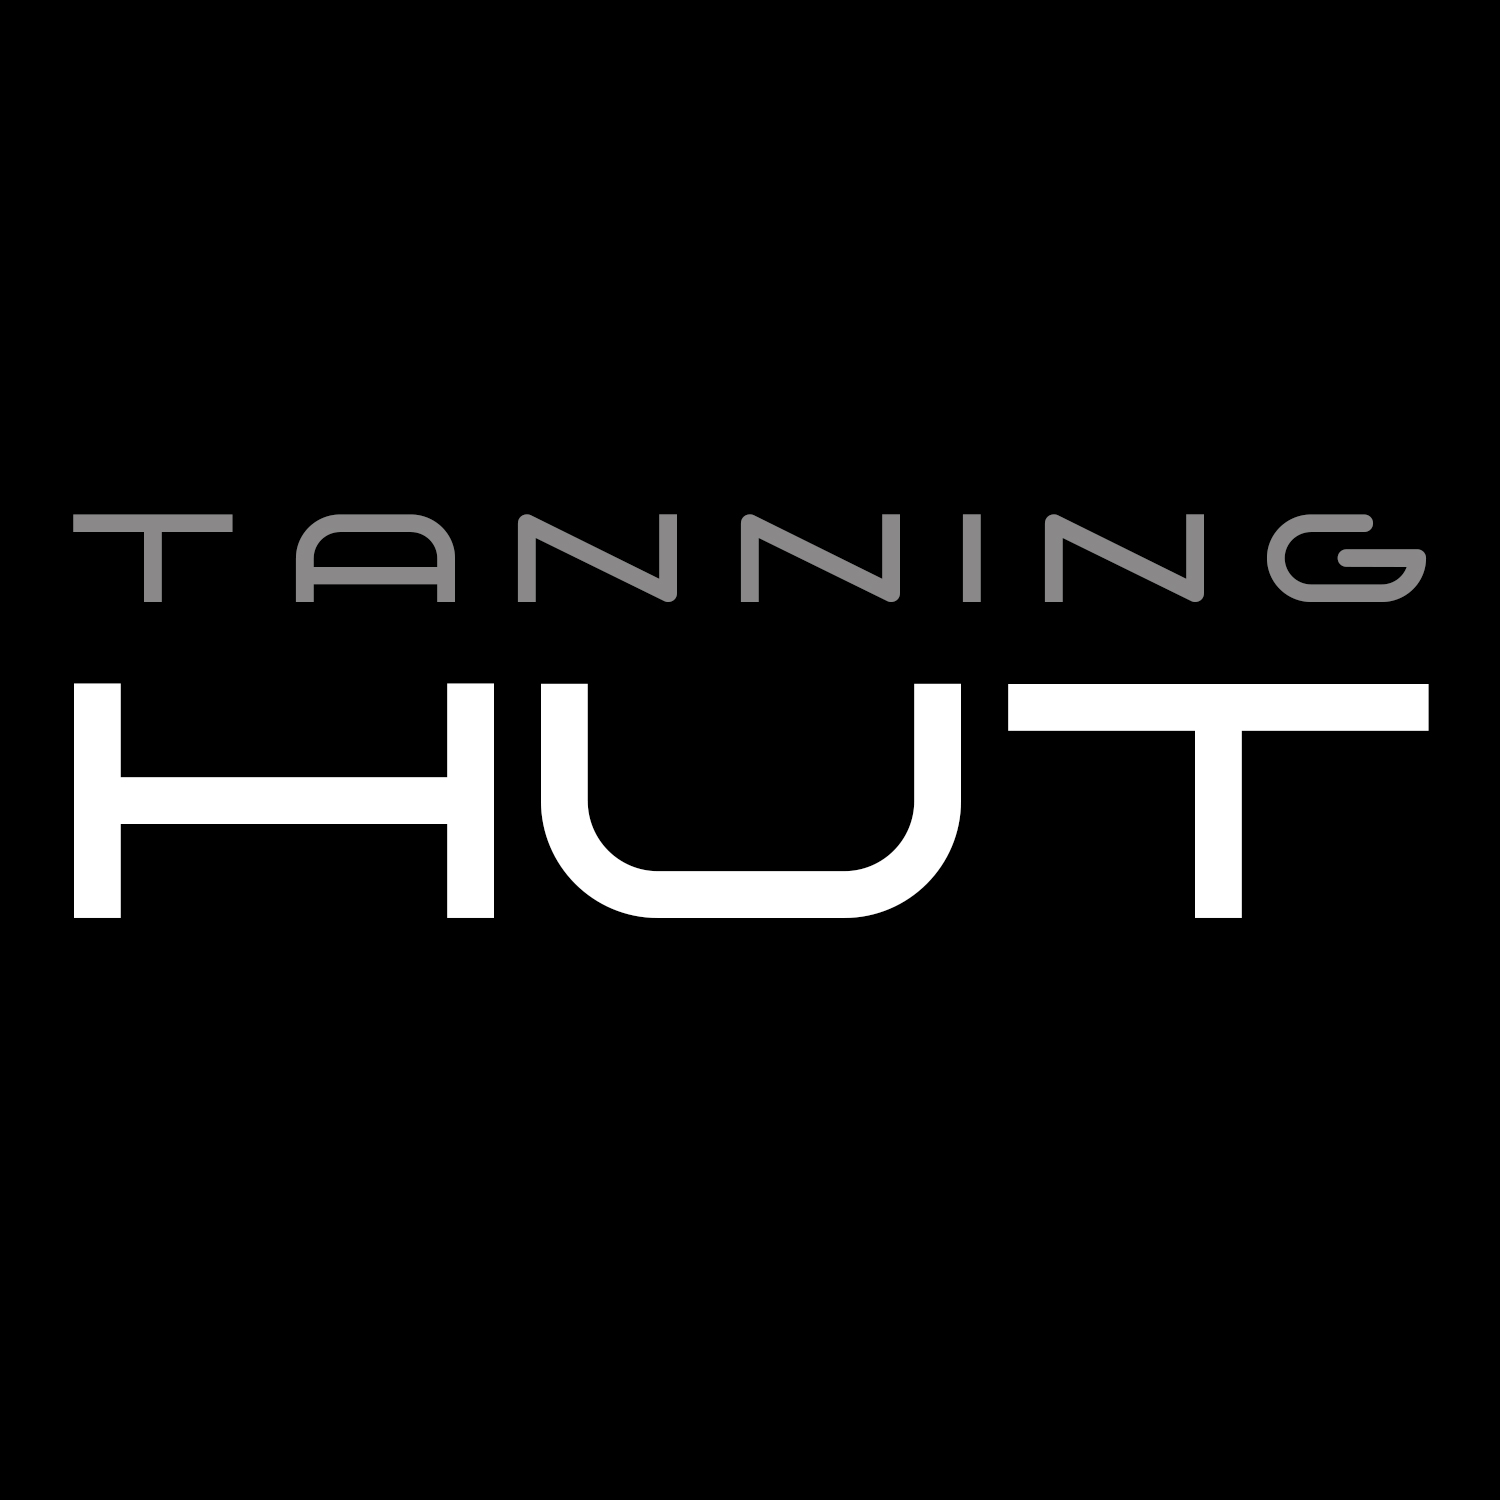 The Tanning Hut 